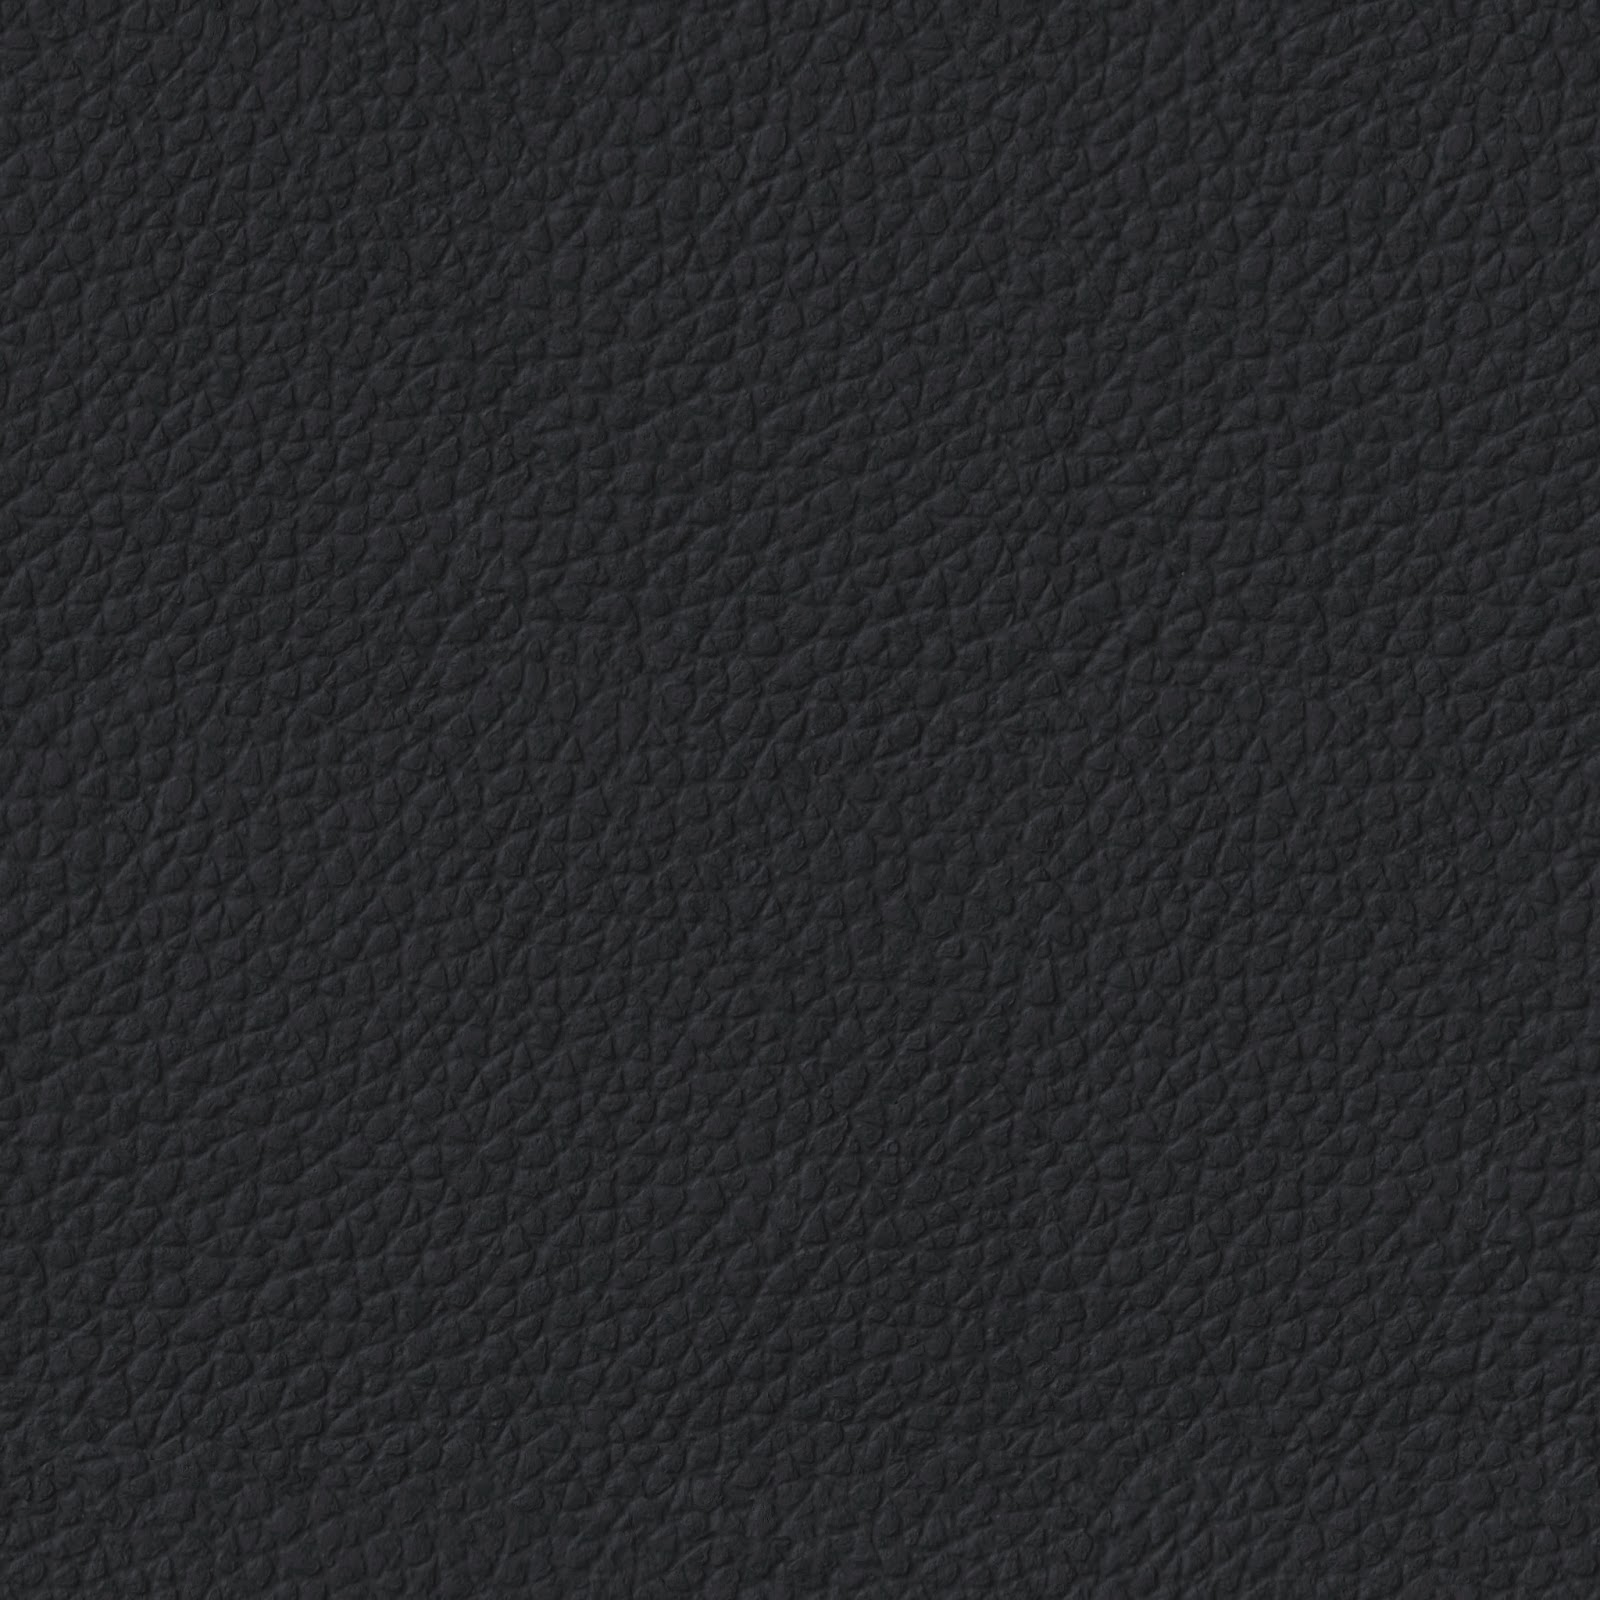 Seamless_Black_Leather_Texture